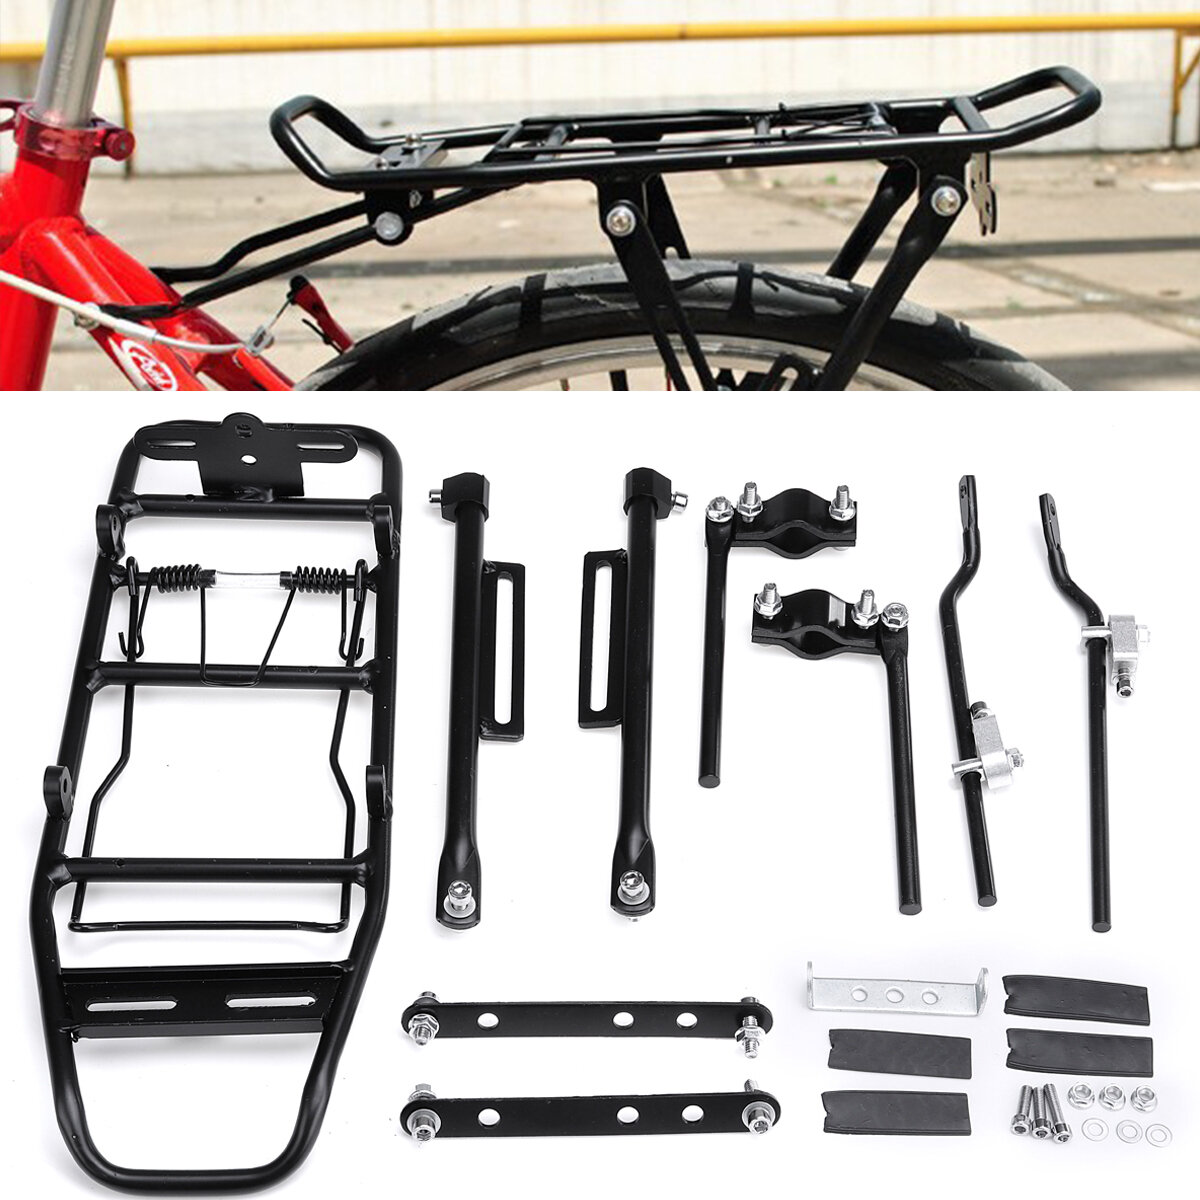 

BIKIGHT 35KG Bearing Aluminum Alloy Bicycle Mountain Bike Rear Rack Seat Post Mount Luggage Carrier Cargo Rack For 24''-